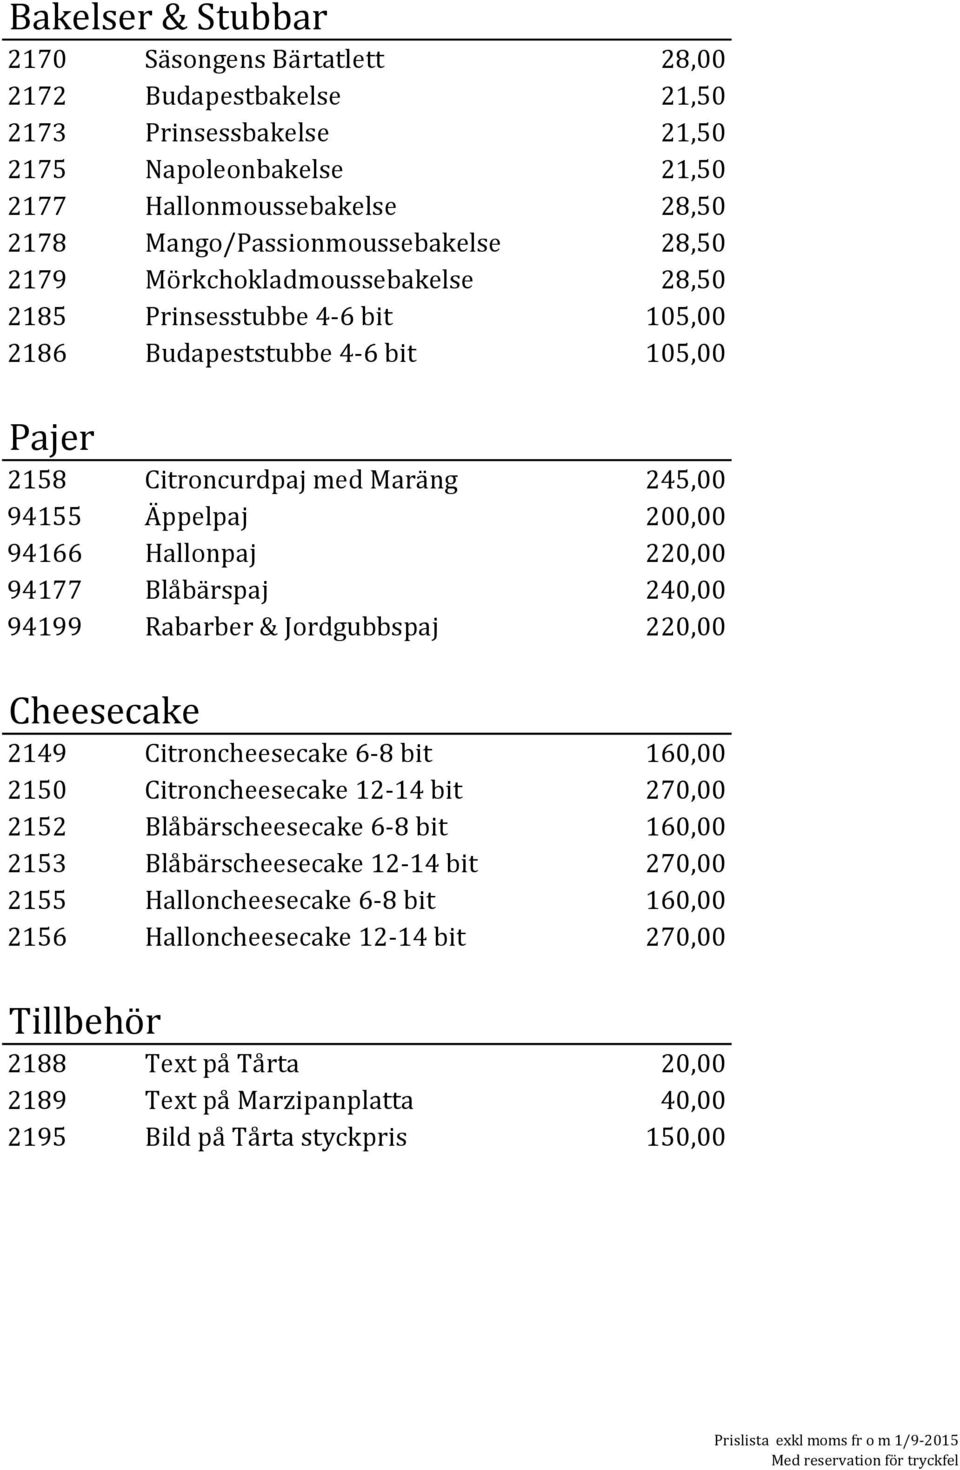 94177 Blåbärspaj 240,00 94199 Rabarber & Jordgubbspaj 220,00 Cheesecake 2149 Citroncheesecake 6-8 bit 160,00 2150 Citroncheesecake 12-14 bit 270,00 2152 Blåbärscheesecake 6-8 bit 160,00 2153